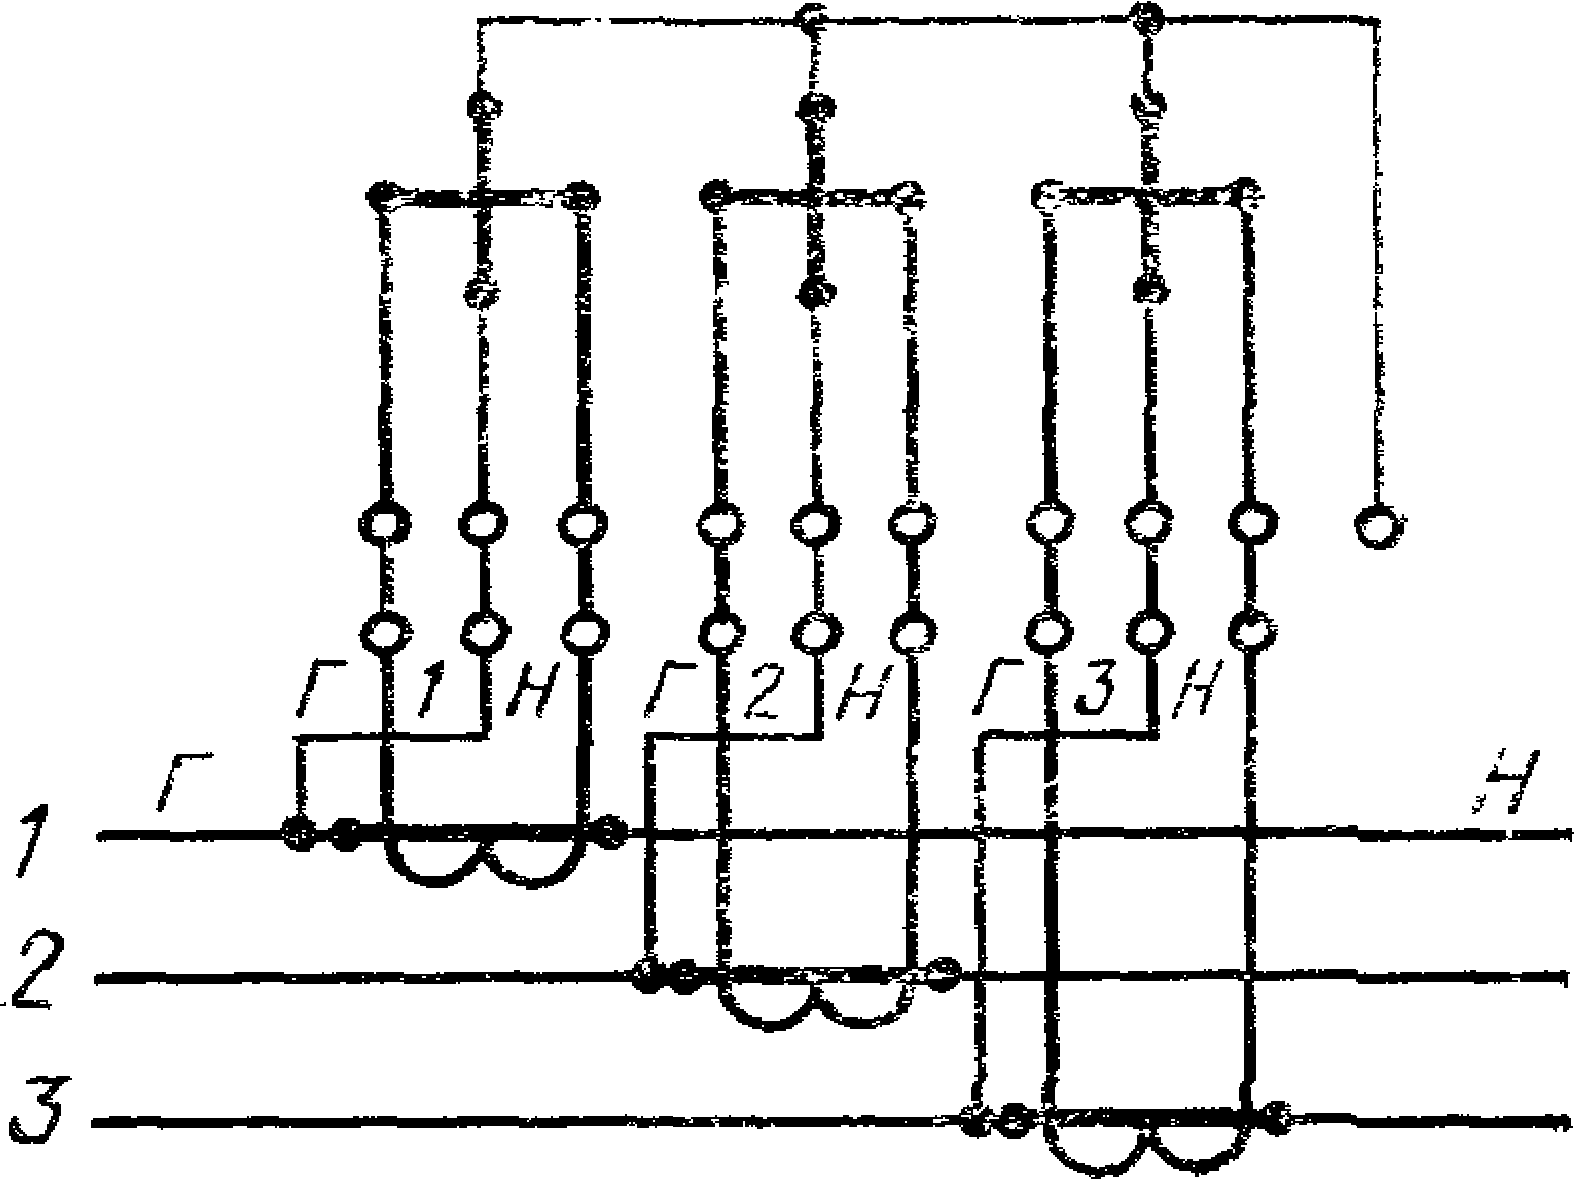 Подключение счетчика с трансформаторами. Схема подключения счетчика через трансформаторы тока 0.4кв. Схема расключения трансформаторов тока и счетчика. Схема подключения электросчетчика через трансформаторы тока. Схема подключения трехфазного счетчика через трансформаторы тока.